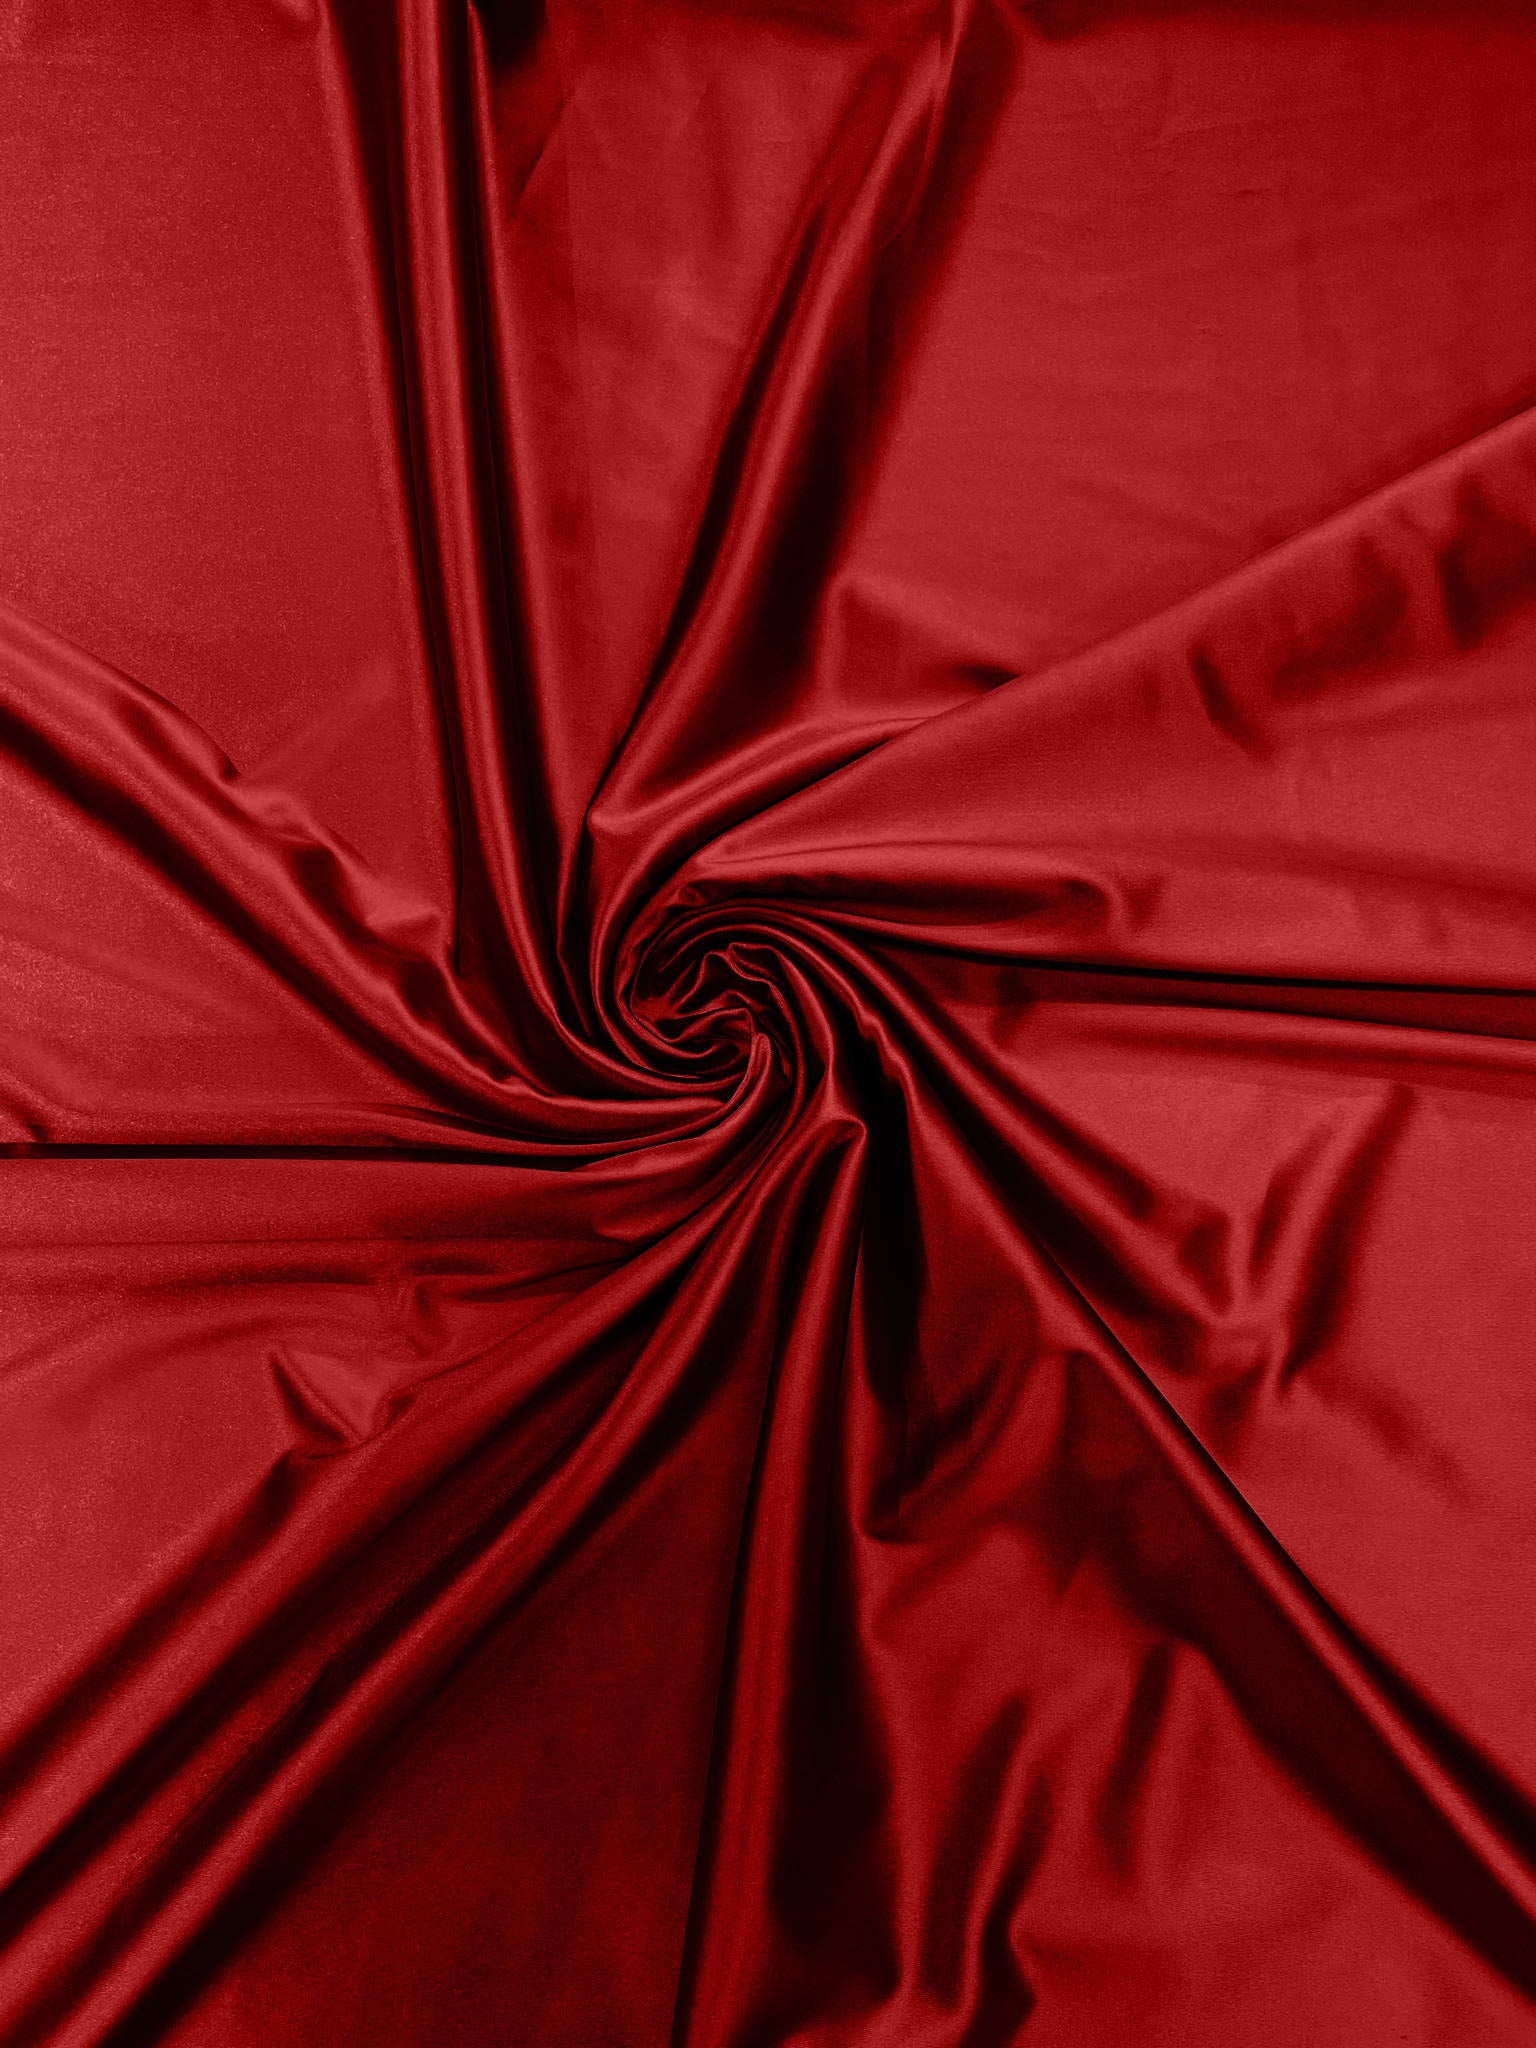 Dark Red Heavy Shiny Satin Stretch Spandex Fabric/58 Inches Wide/Prom/Wedding/Cosplays.